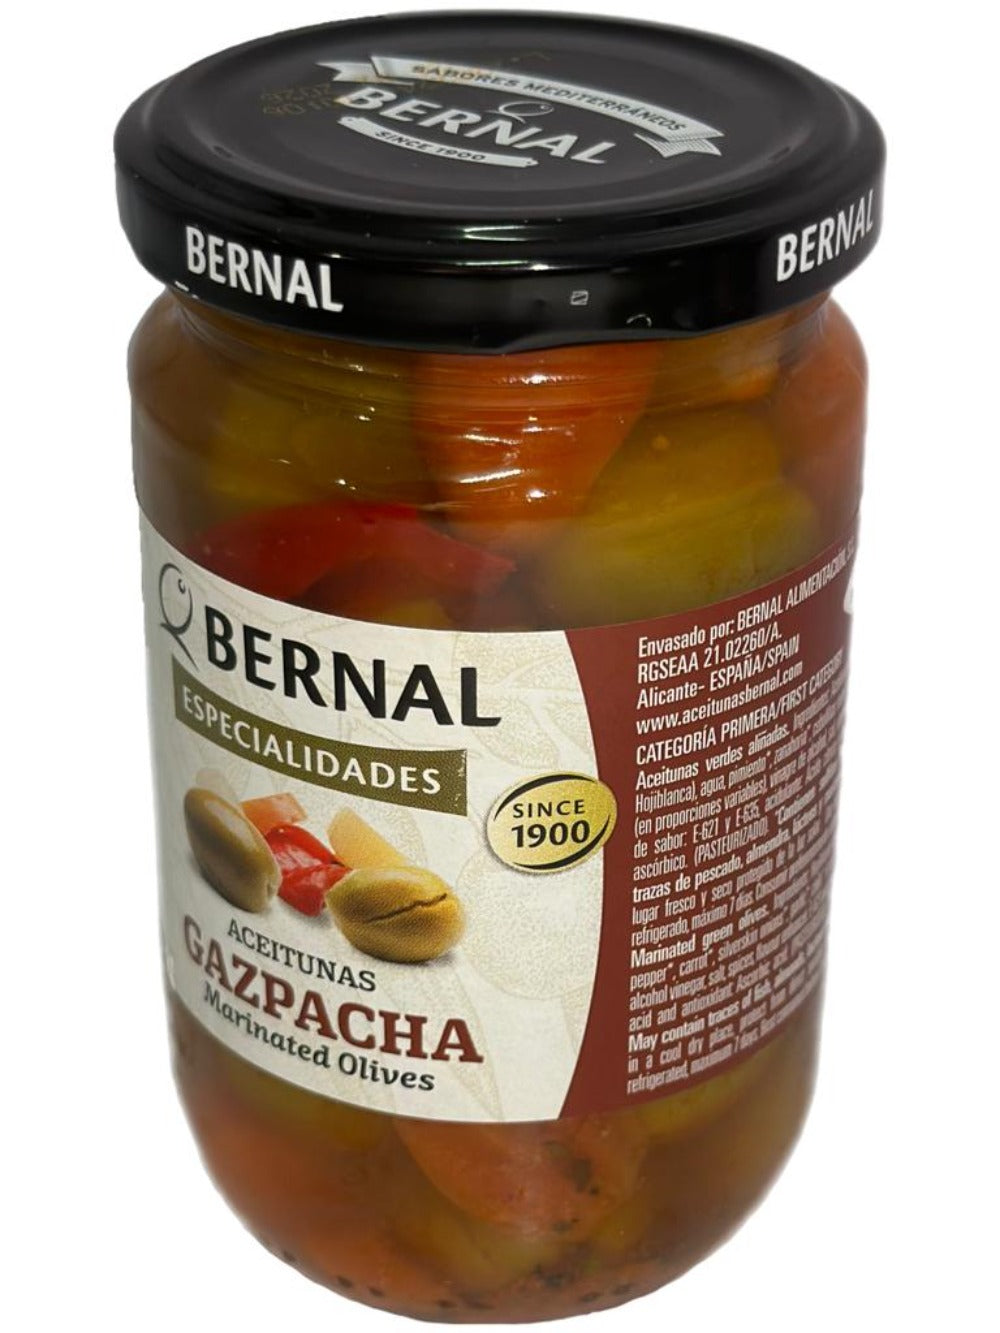 Bernal Especialidades Aceitunas Gazpacho Marinated Olives 300g